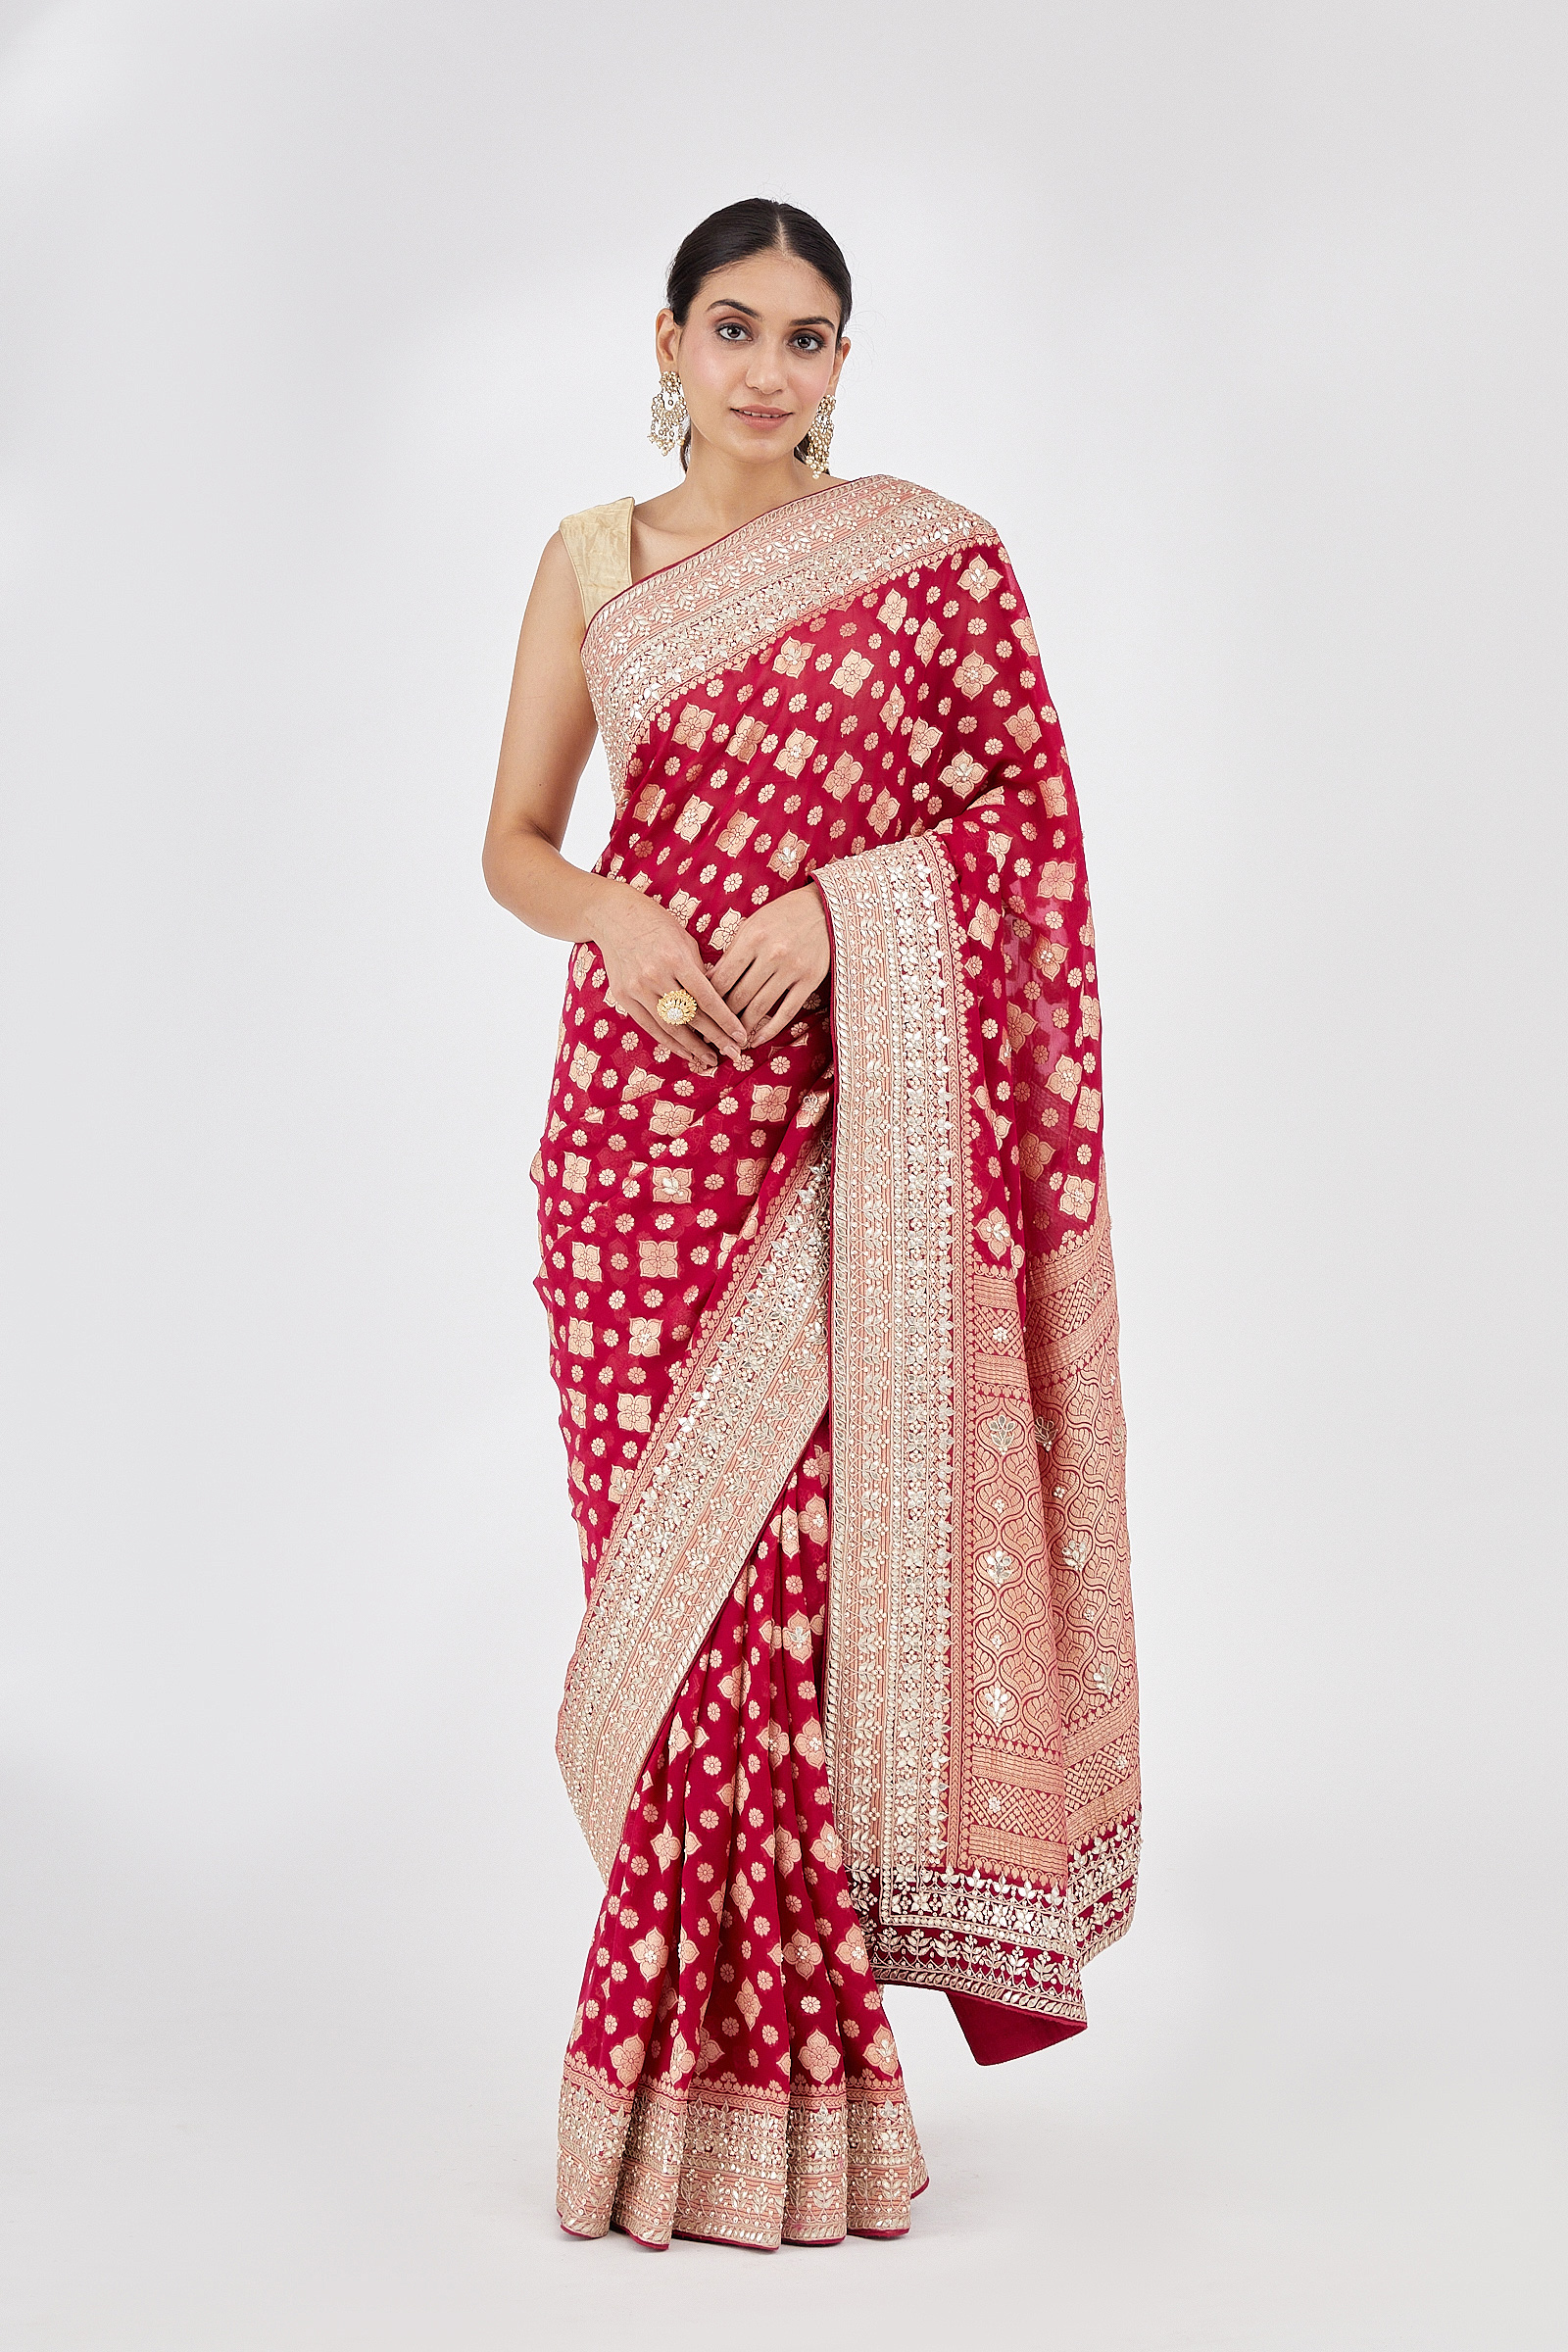 Buy Ruby red banarasi saree online at best price - Karagiri – Karagiri  Global